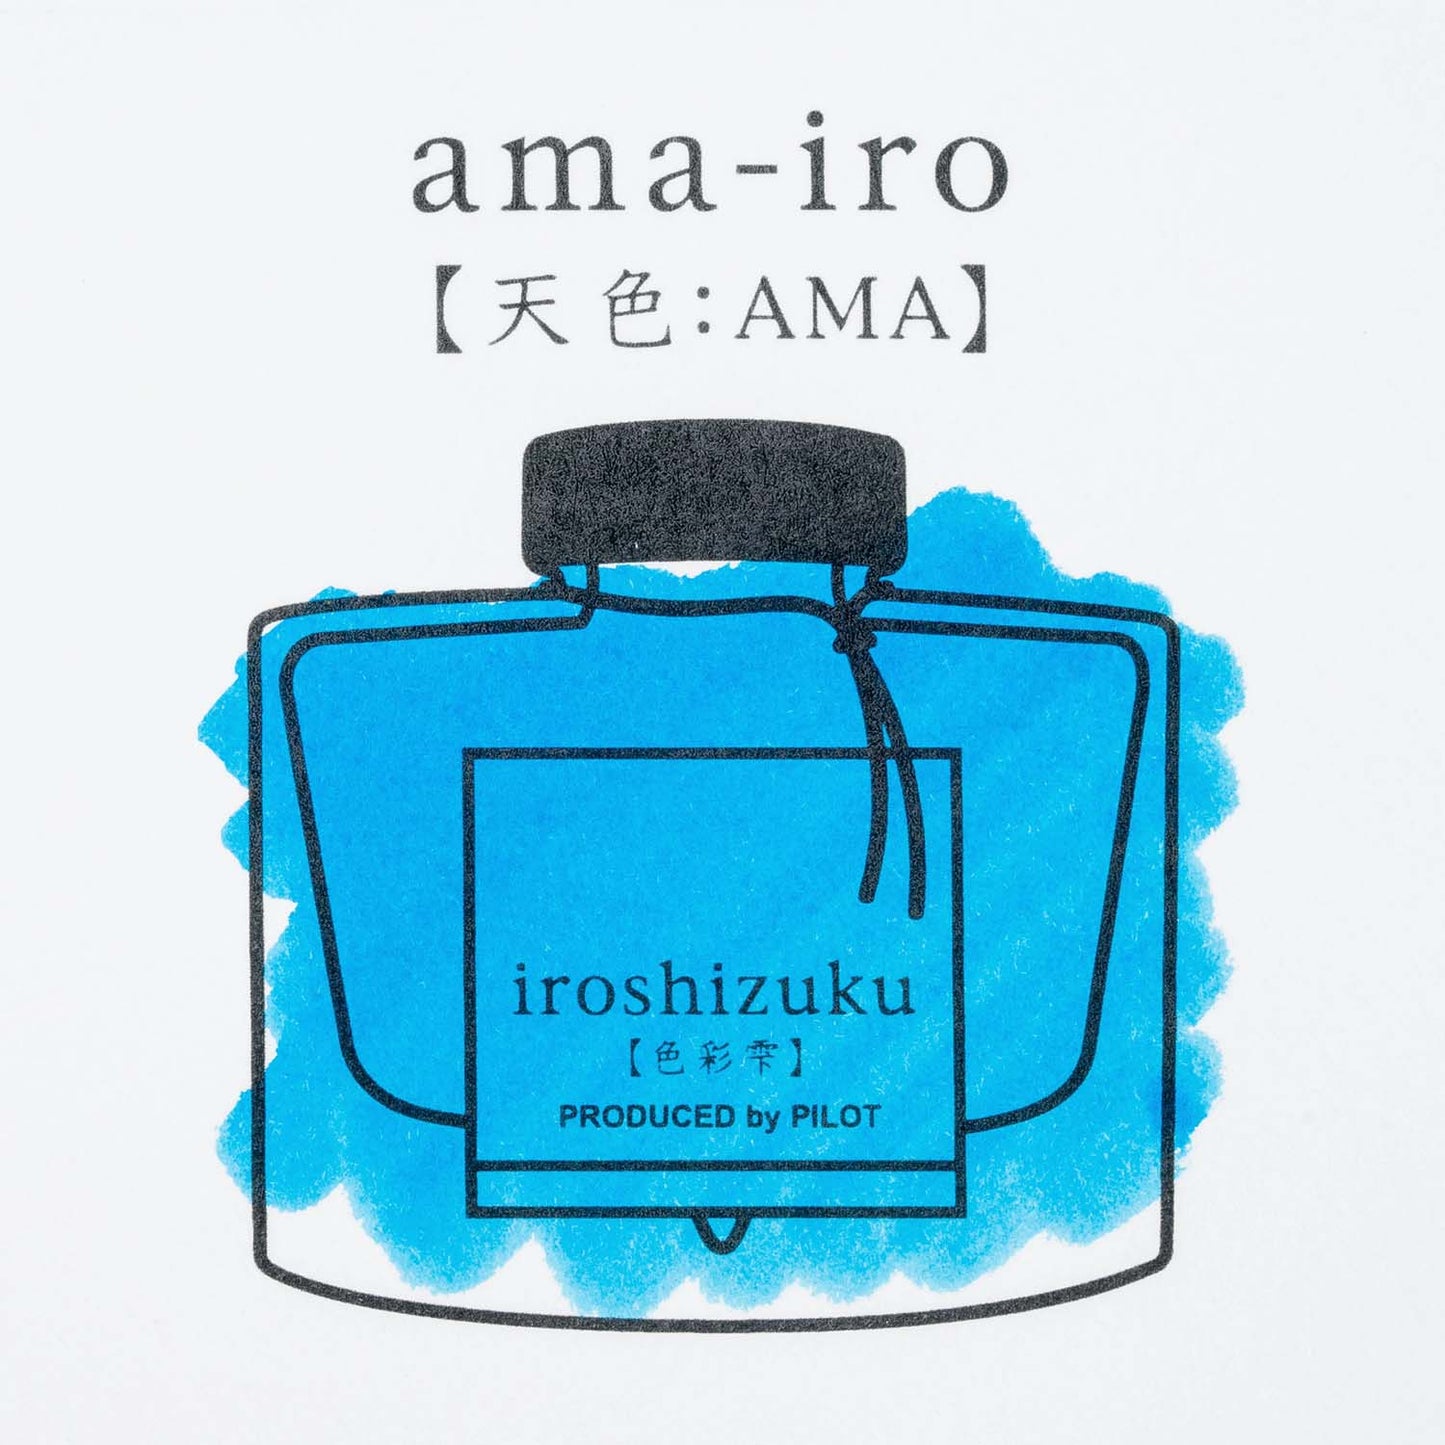 Pilot Iroshizuku Fountain Pen Ink - Ama-iro (Sky Blue) sample